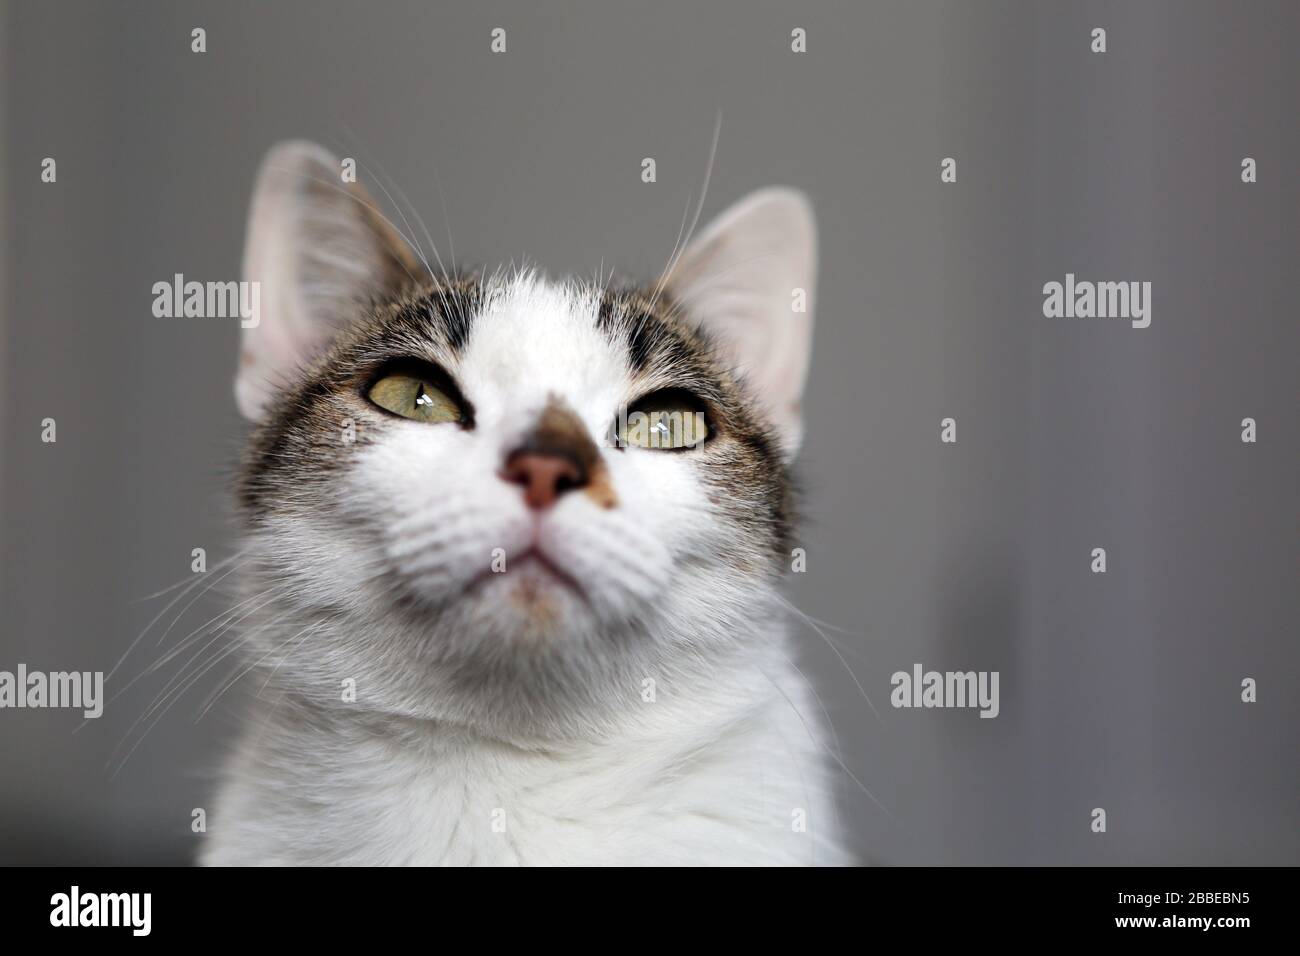 Portrait of a common european cat Stock Photo